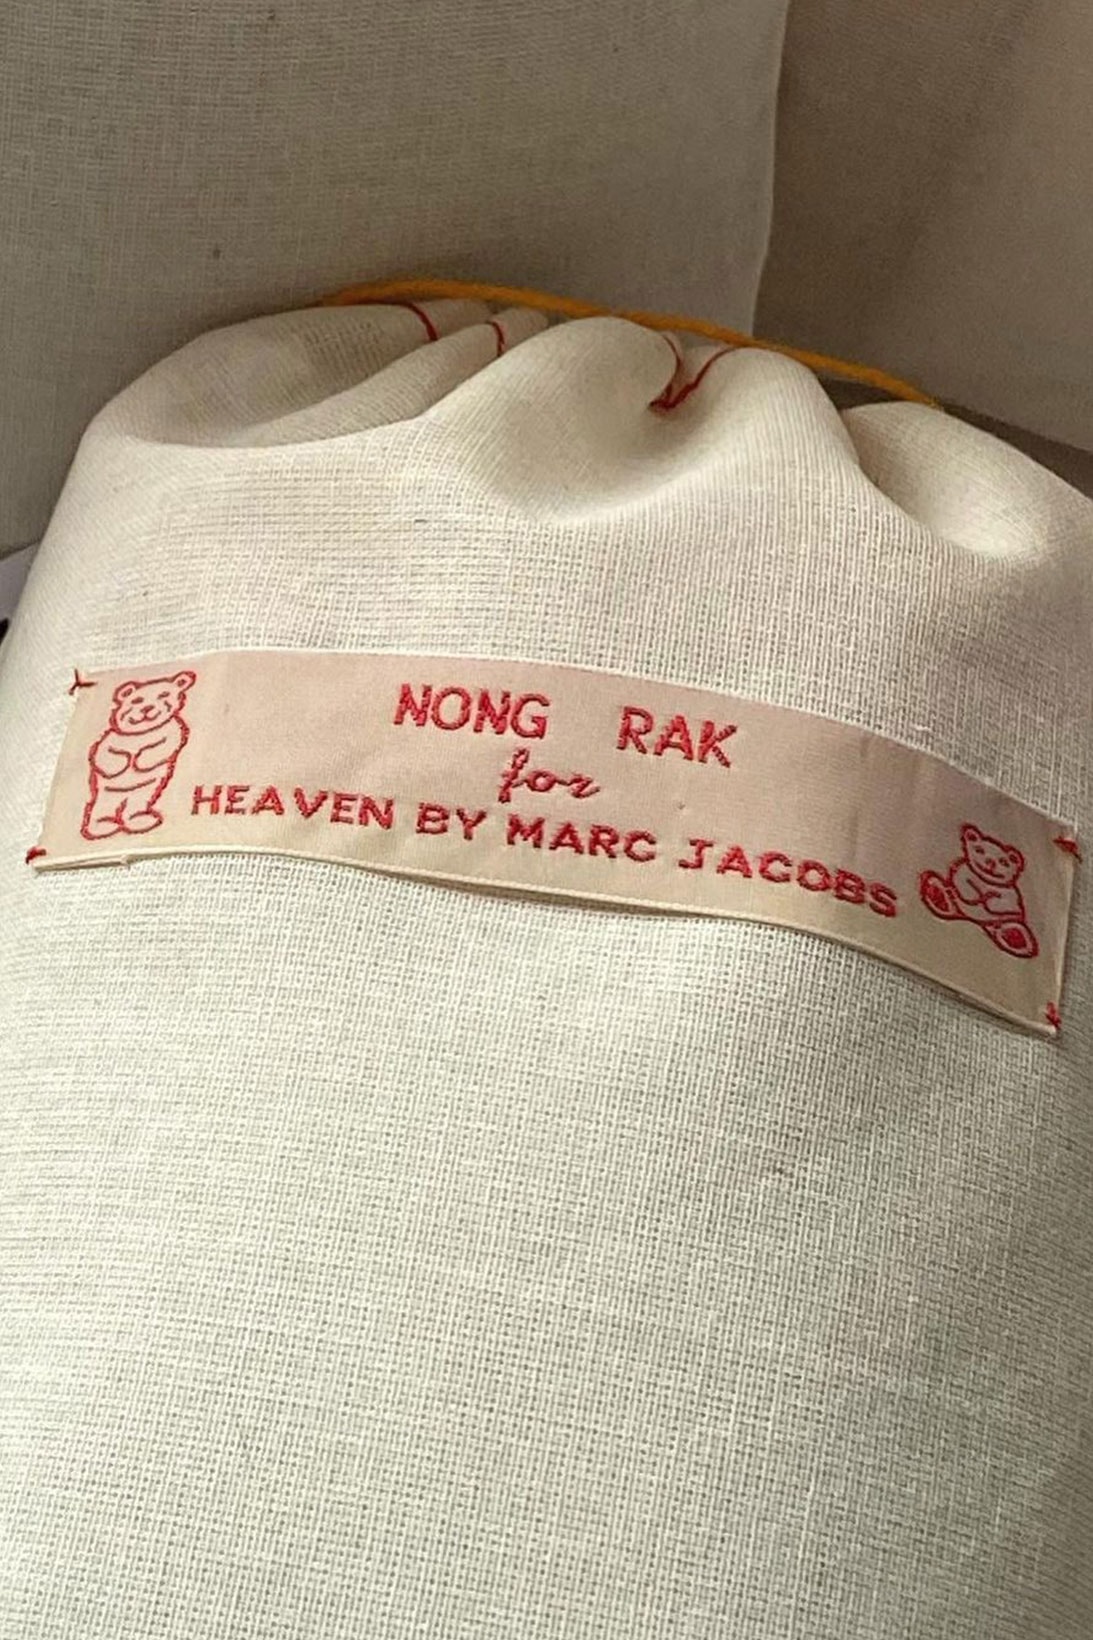 Heaven by Marc Jacobs Nong Rak Collaboration Knitwear Release Date 